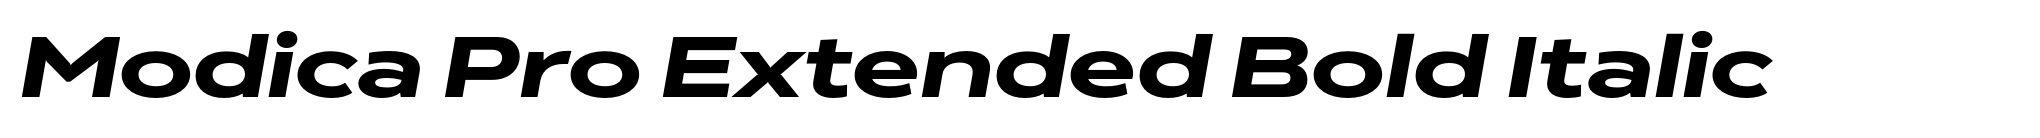 Modica Pro Extended Bold Italic image